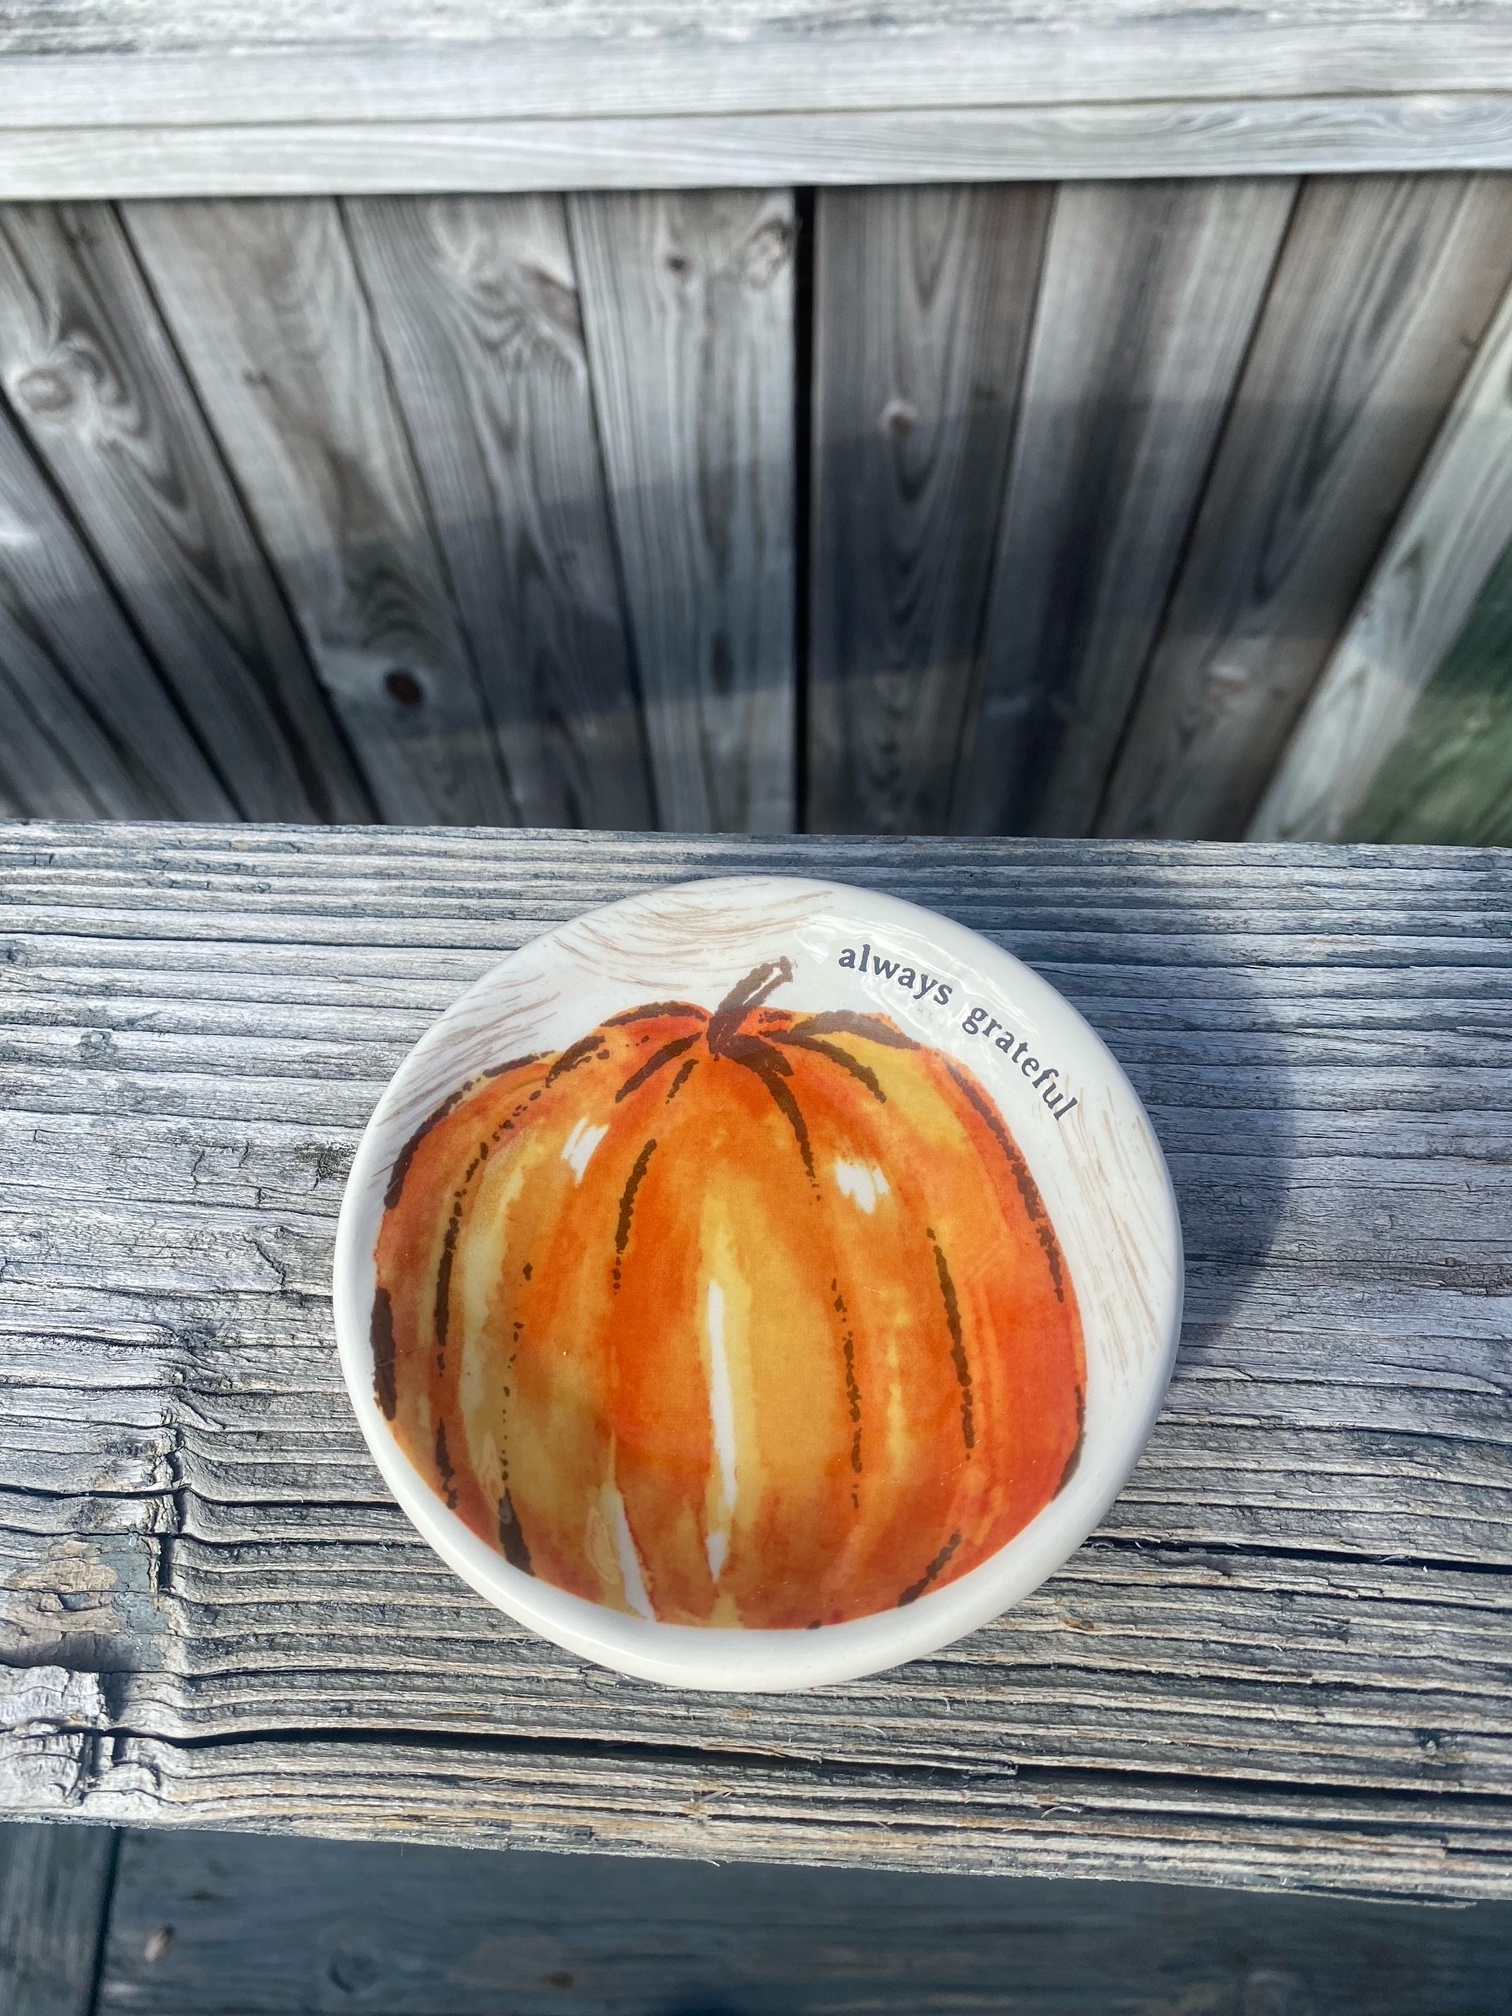 Orange Pumpkin Candle Saucer